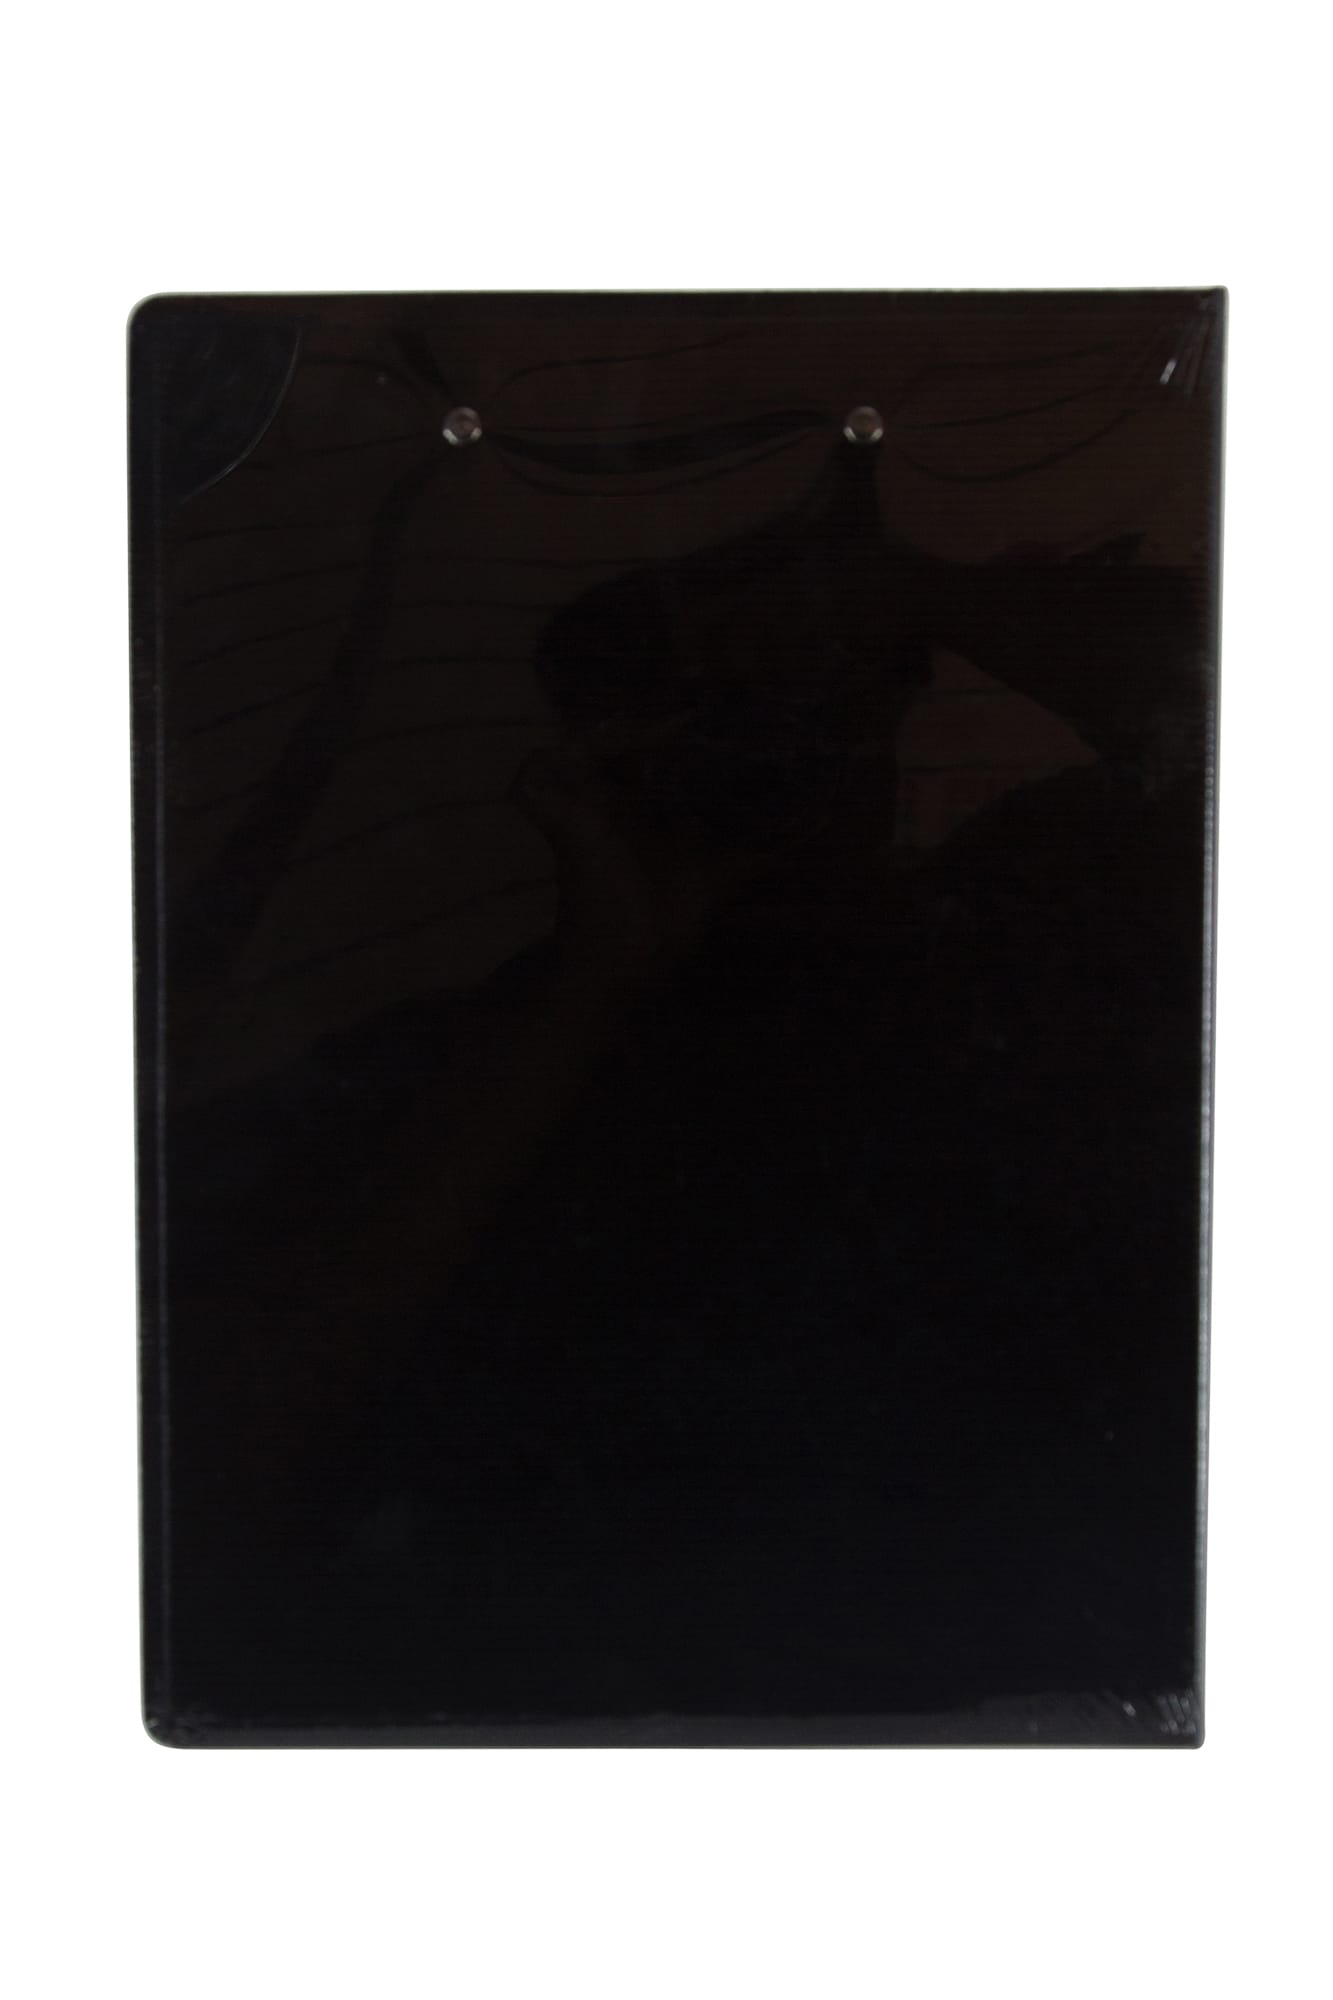 Mobile Ops Portfolio Clipboard Vertical BLACK (61634)